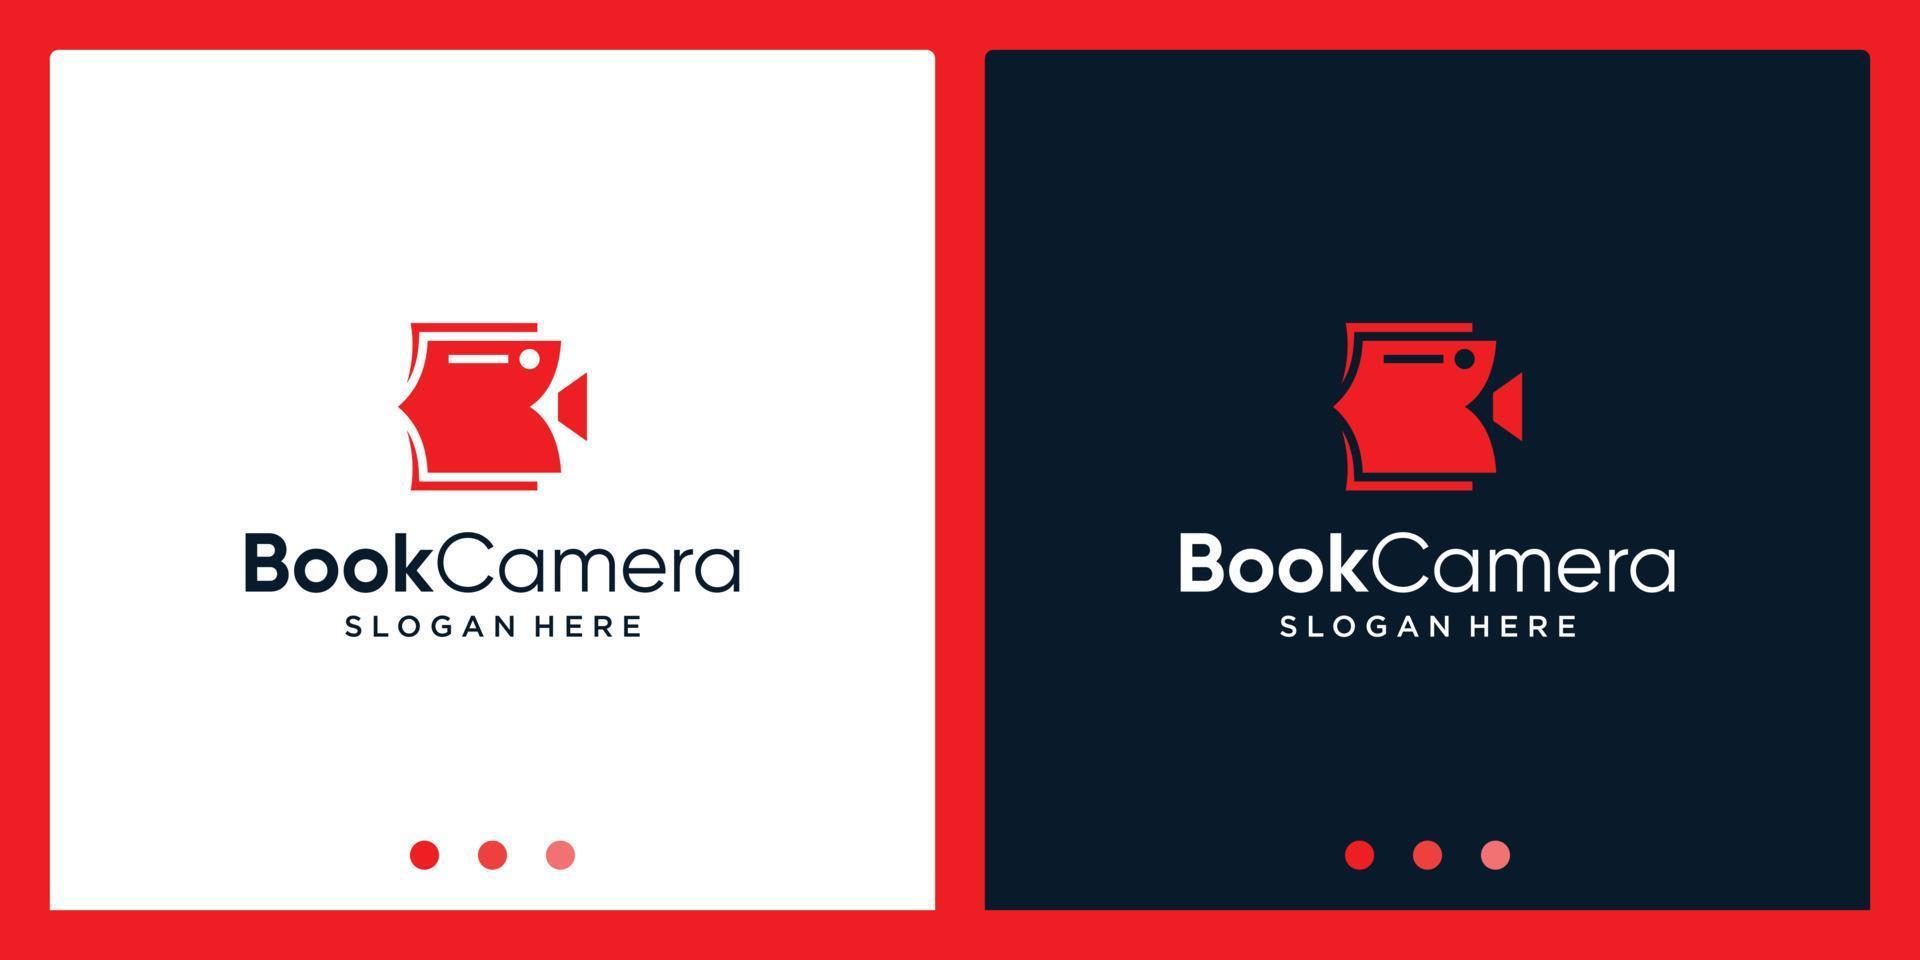 inspiration de conception de logo de livre ouvert avec logo de conception de caméra vidéo. vecteur premium